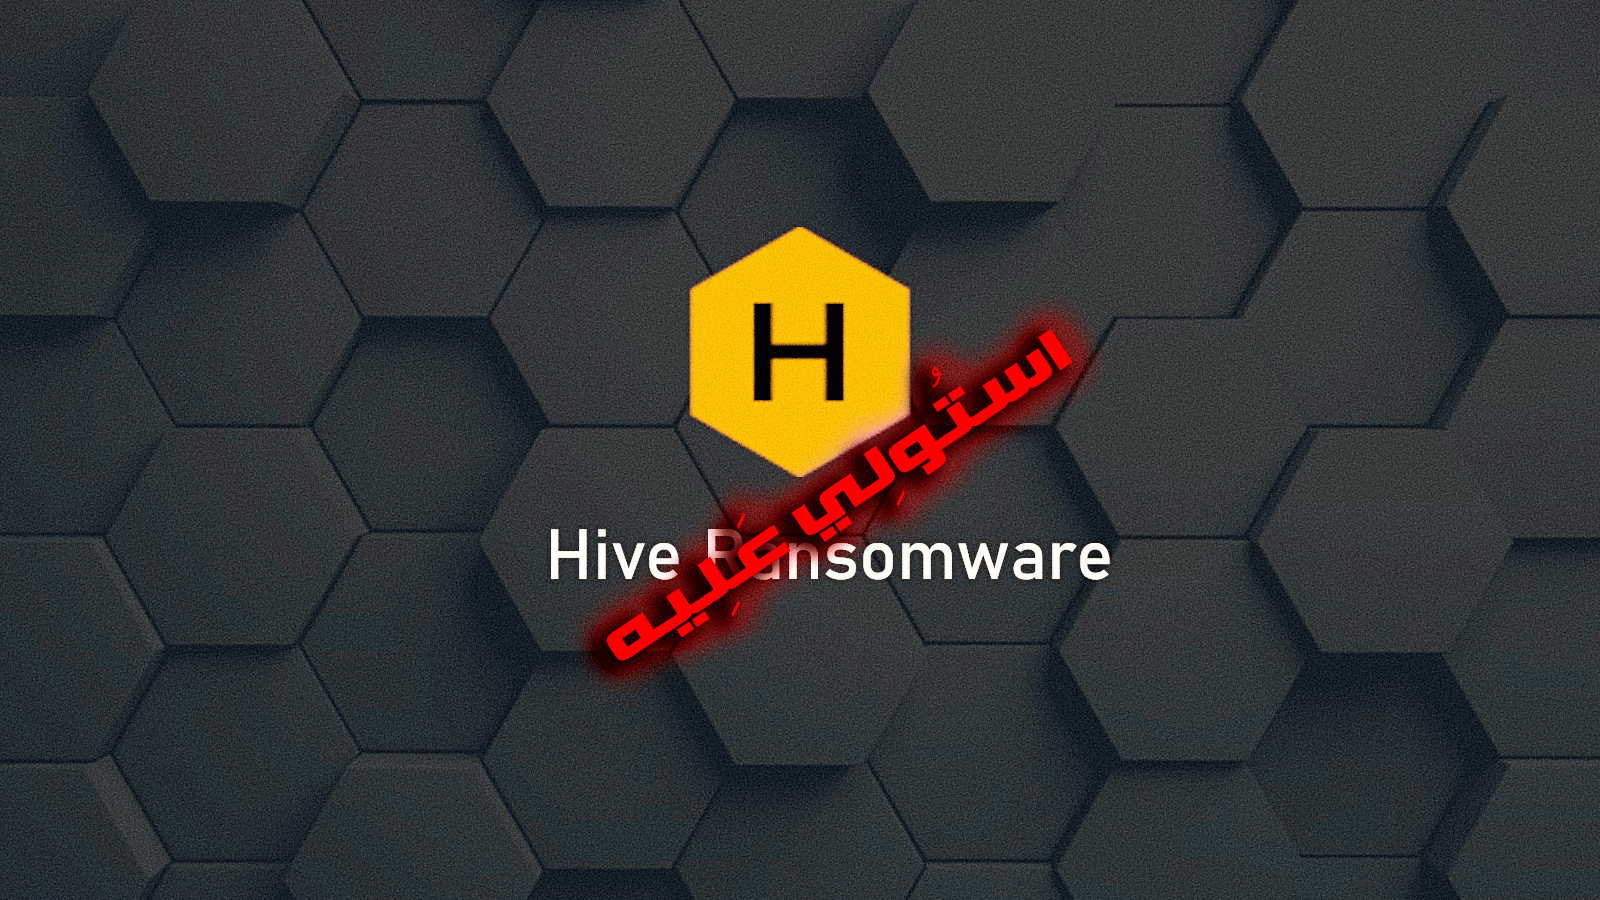 Hive Ransomware Seized